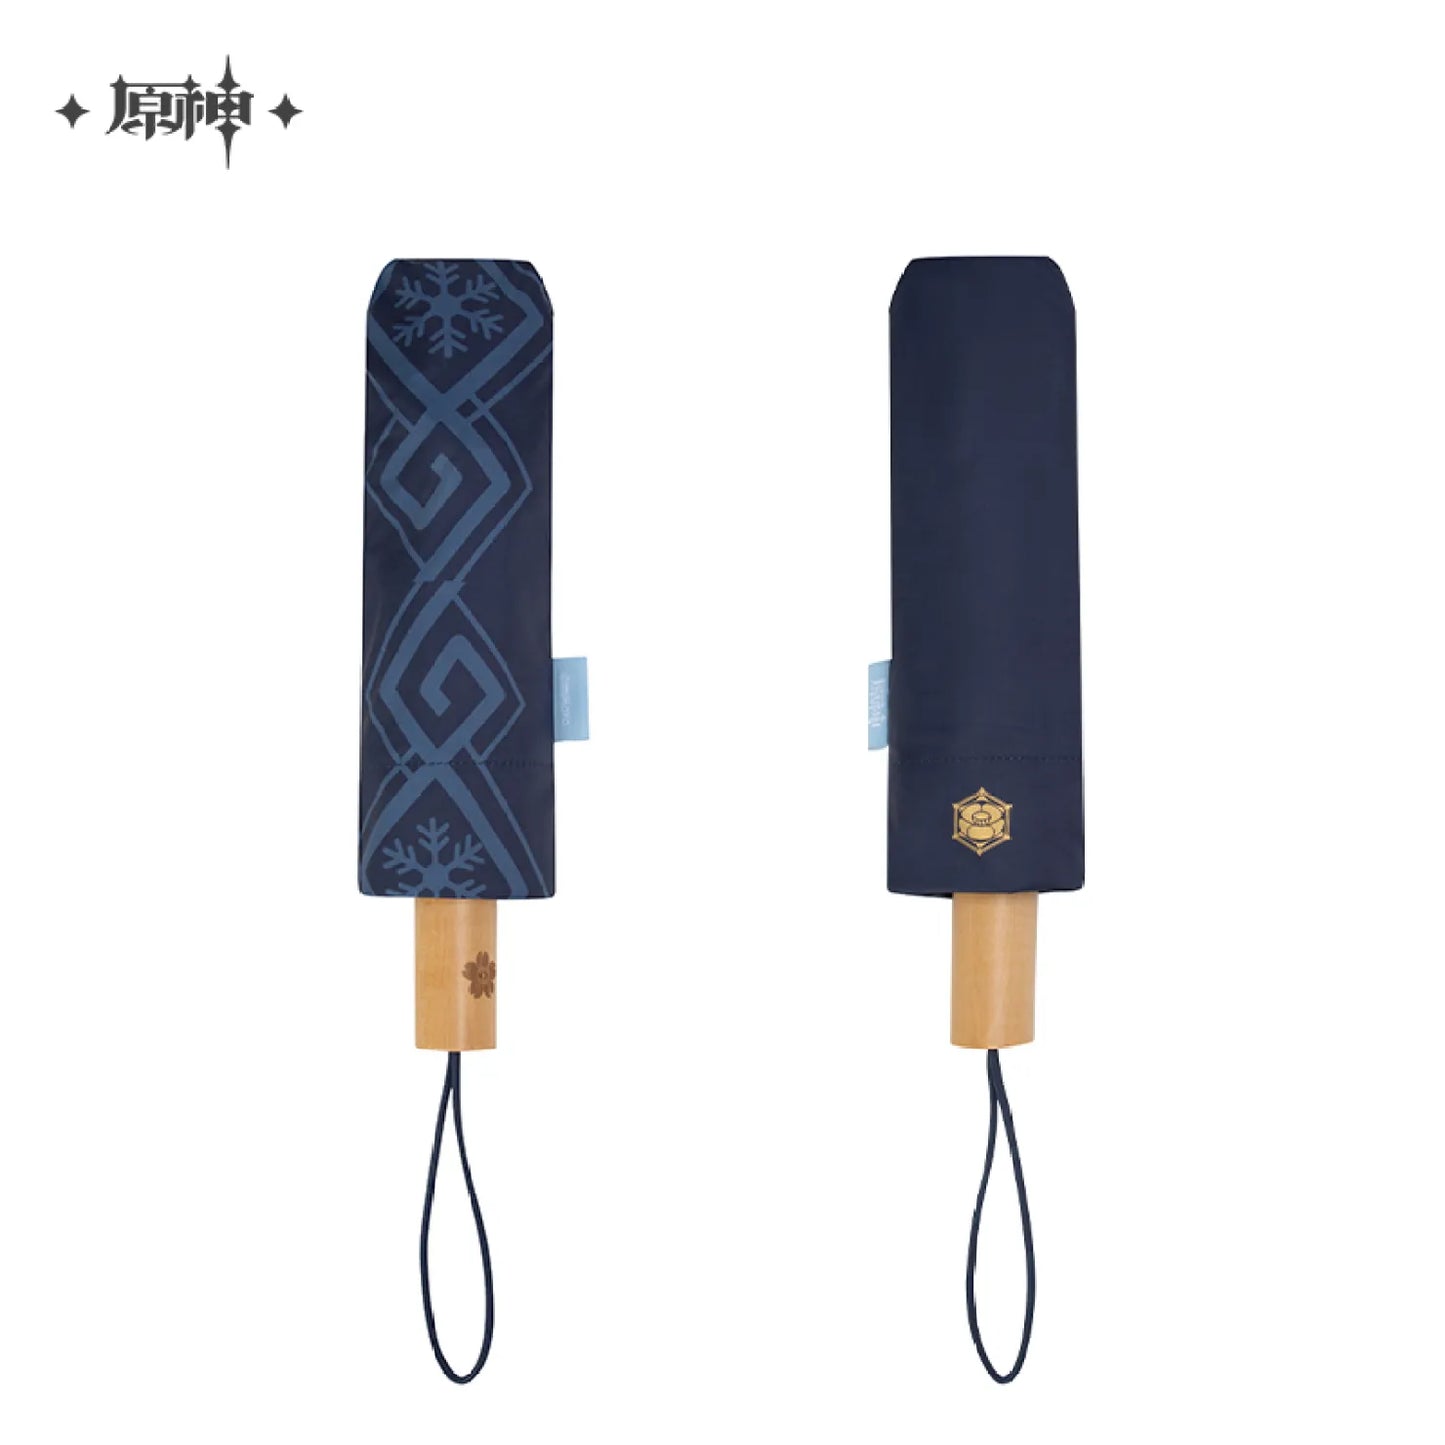 [OFFICIAL MERCHANDISE] Ayaka Impression Theme Folding Umbrella